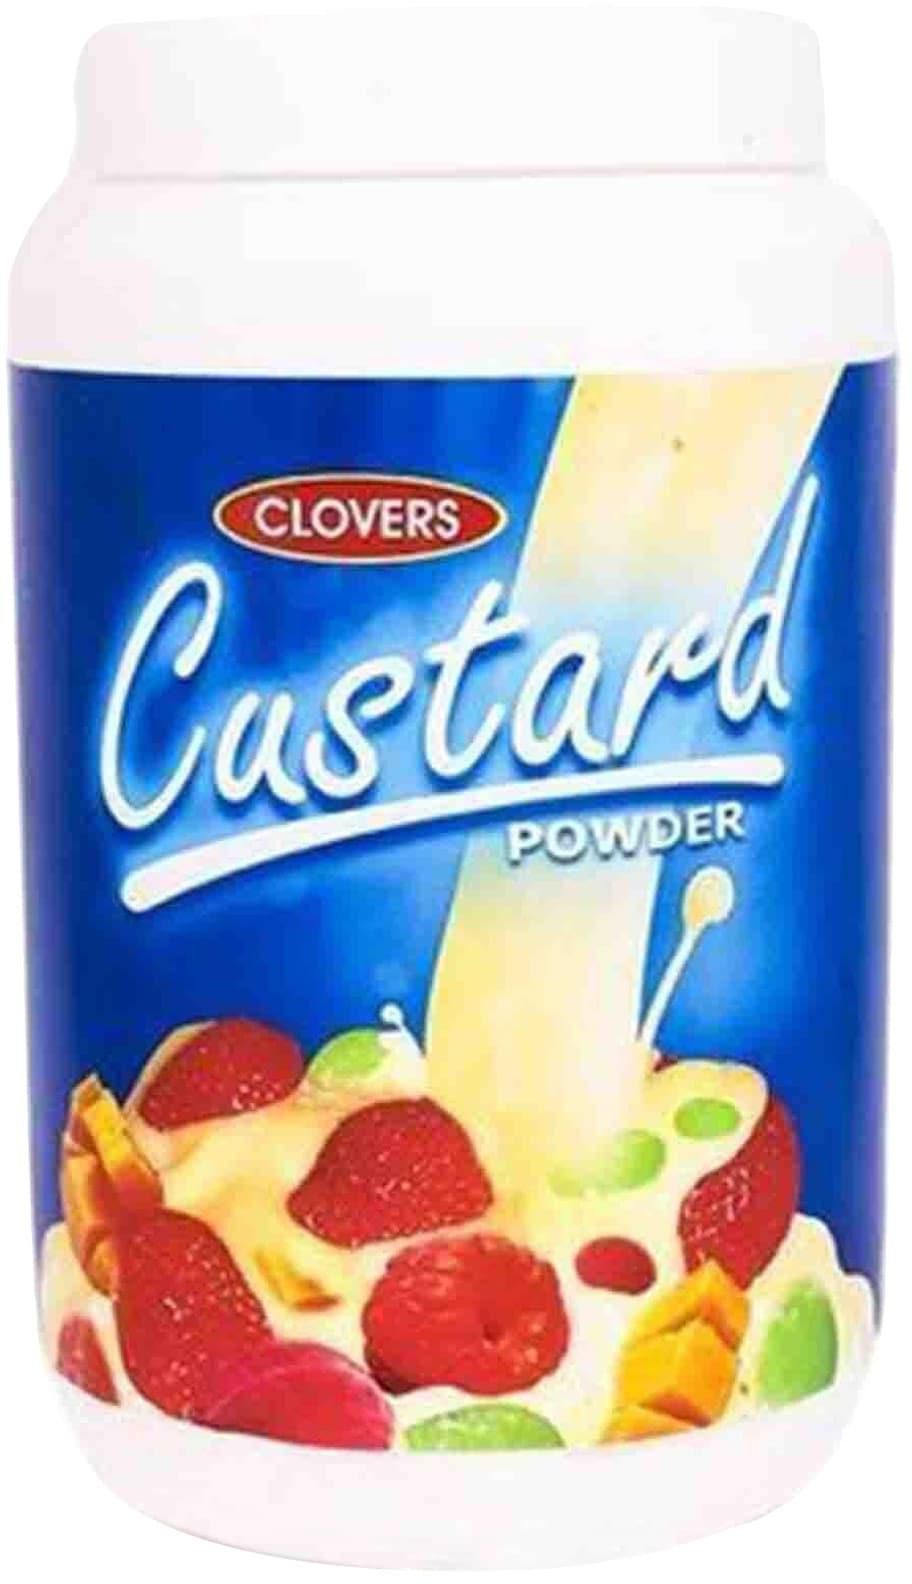 Clovers Custard Powder 500g